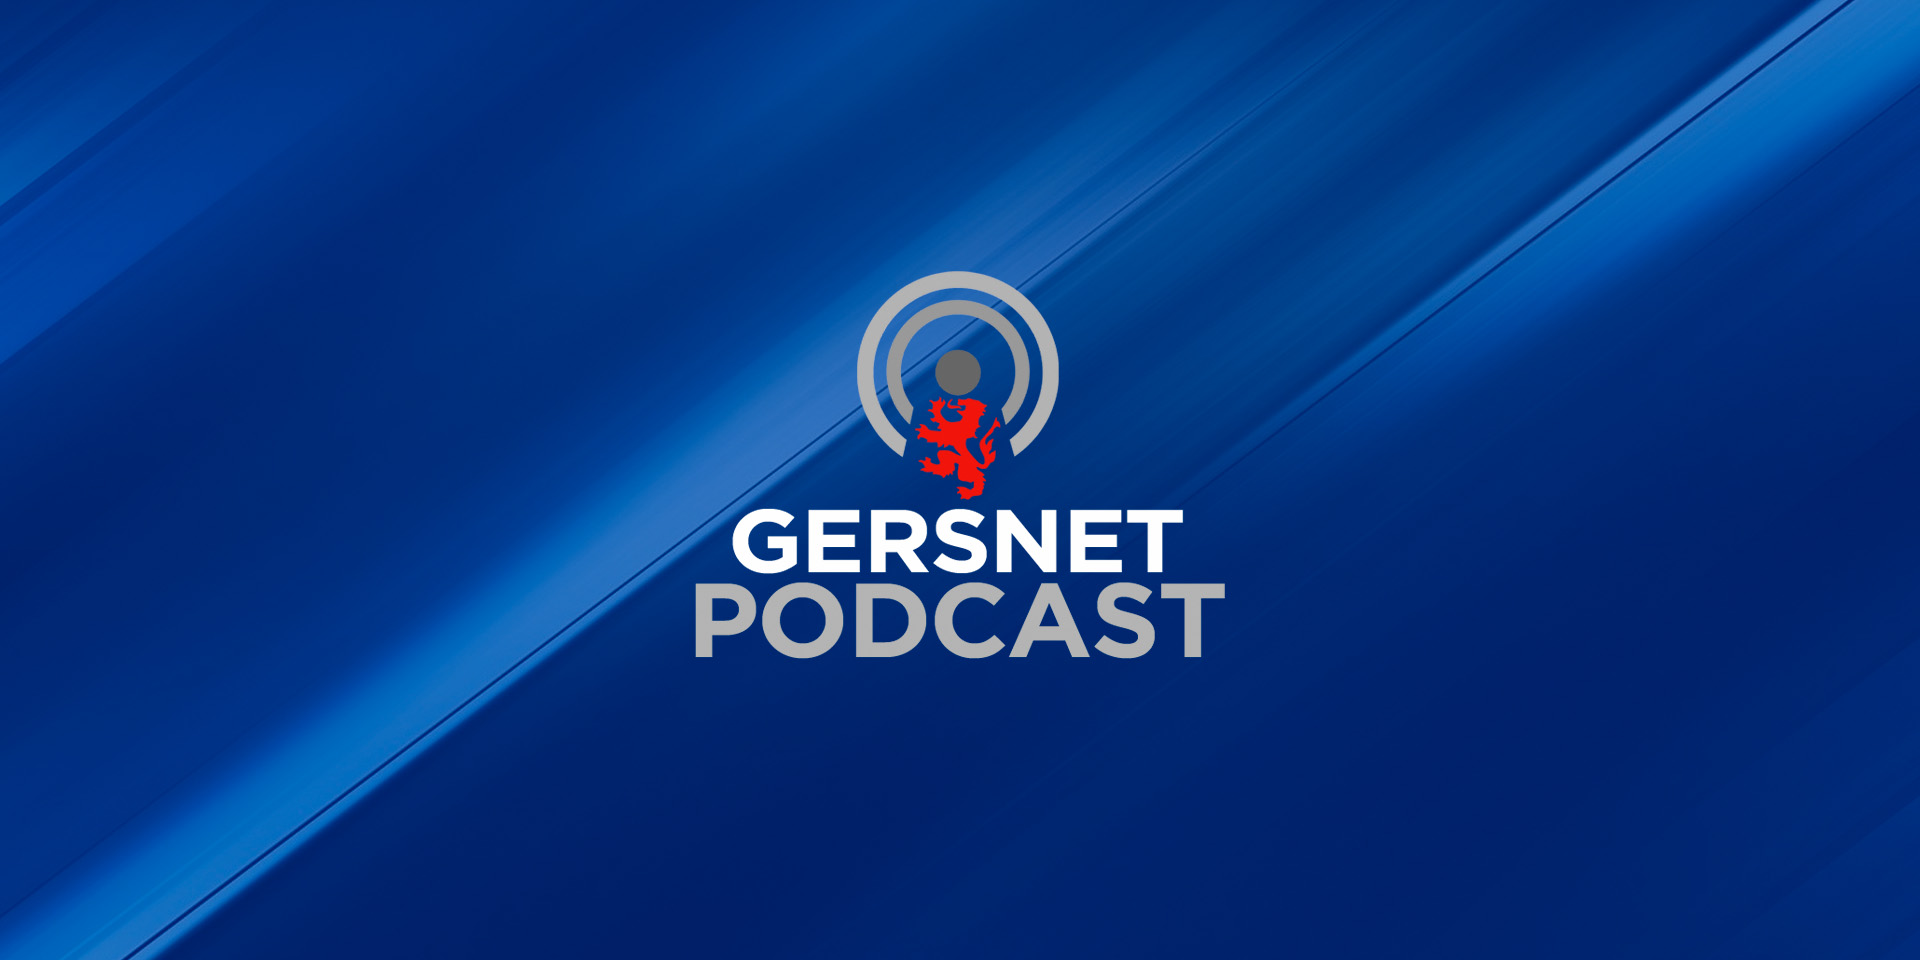 Gersnet Podcast 321 - Enjoyable in Edinburgh